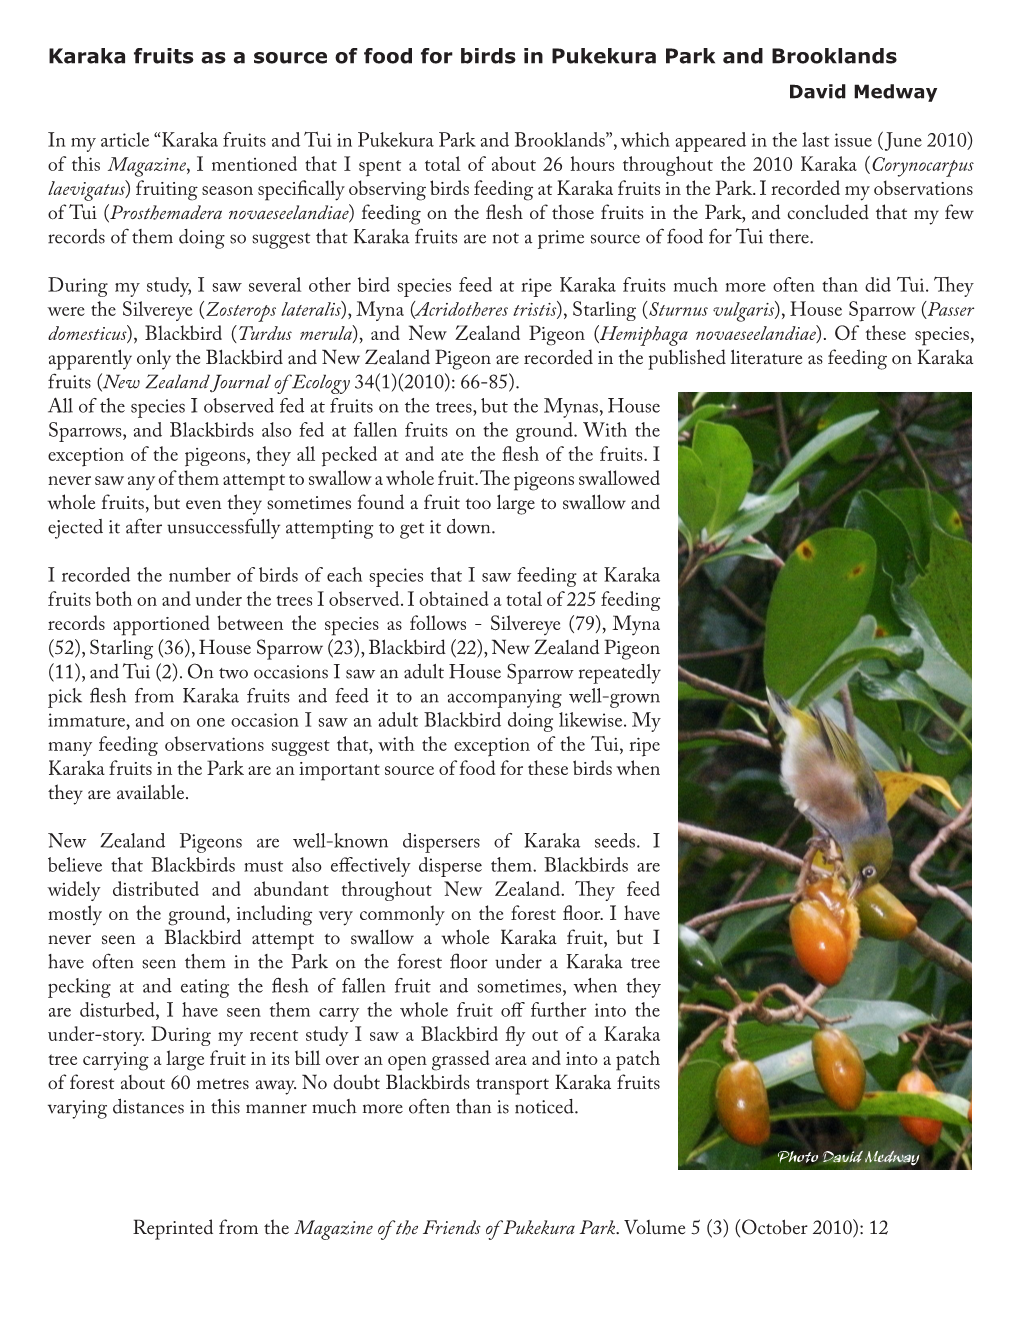 Karaka Fruits As a Source of Food for Birds in Pukekura Park and Brooklands David Medway